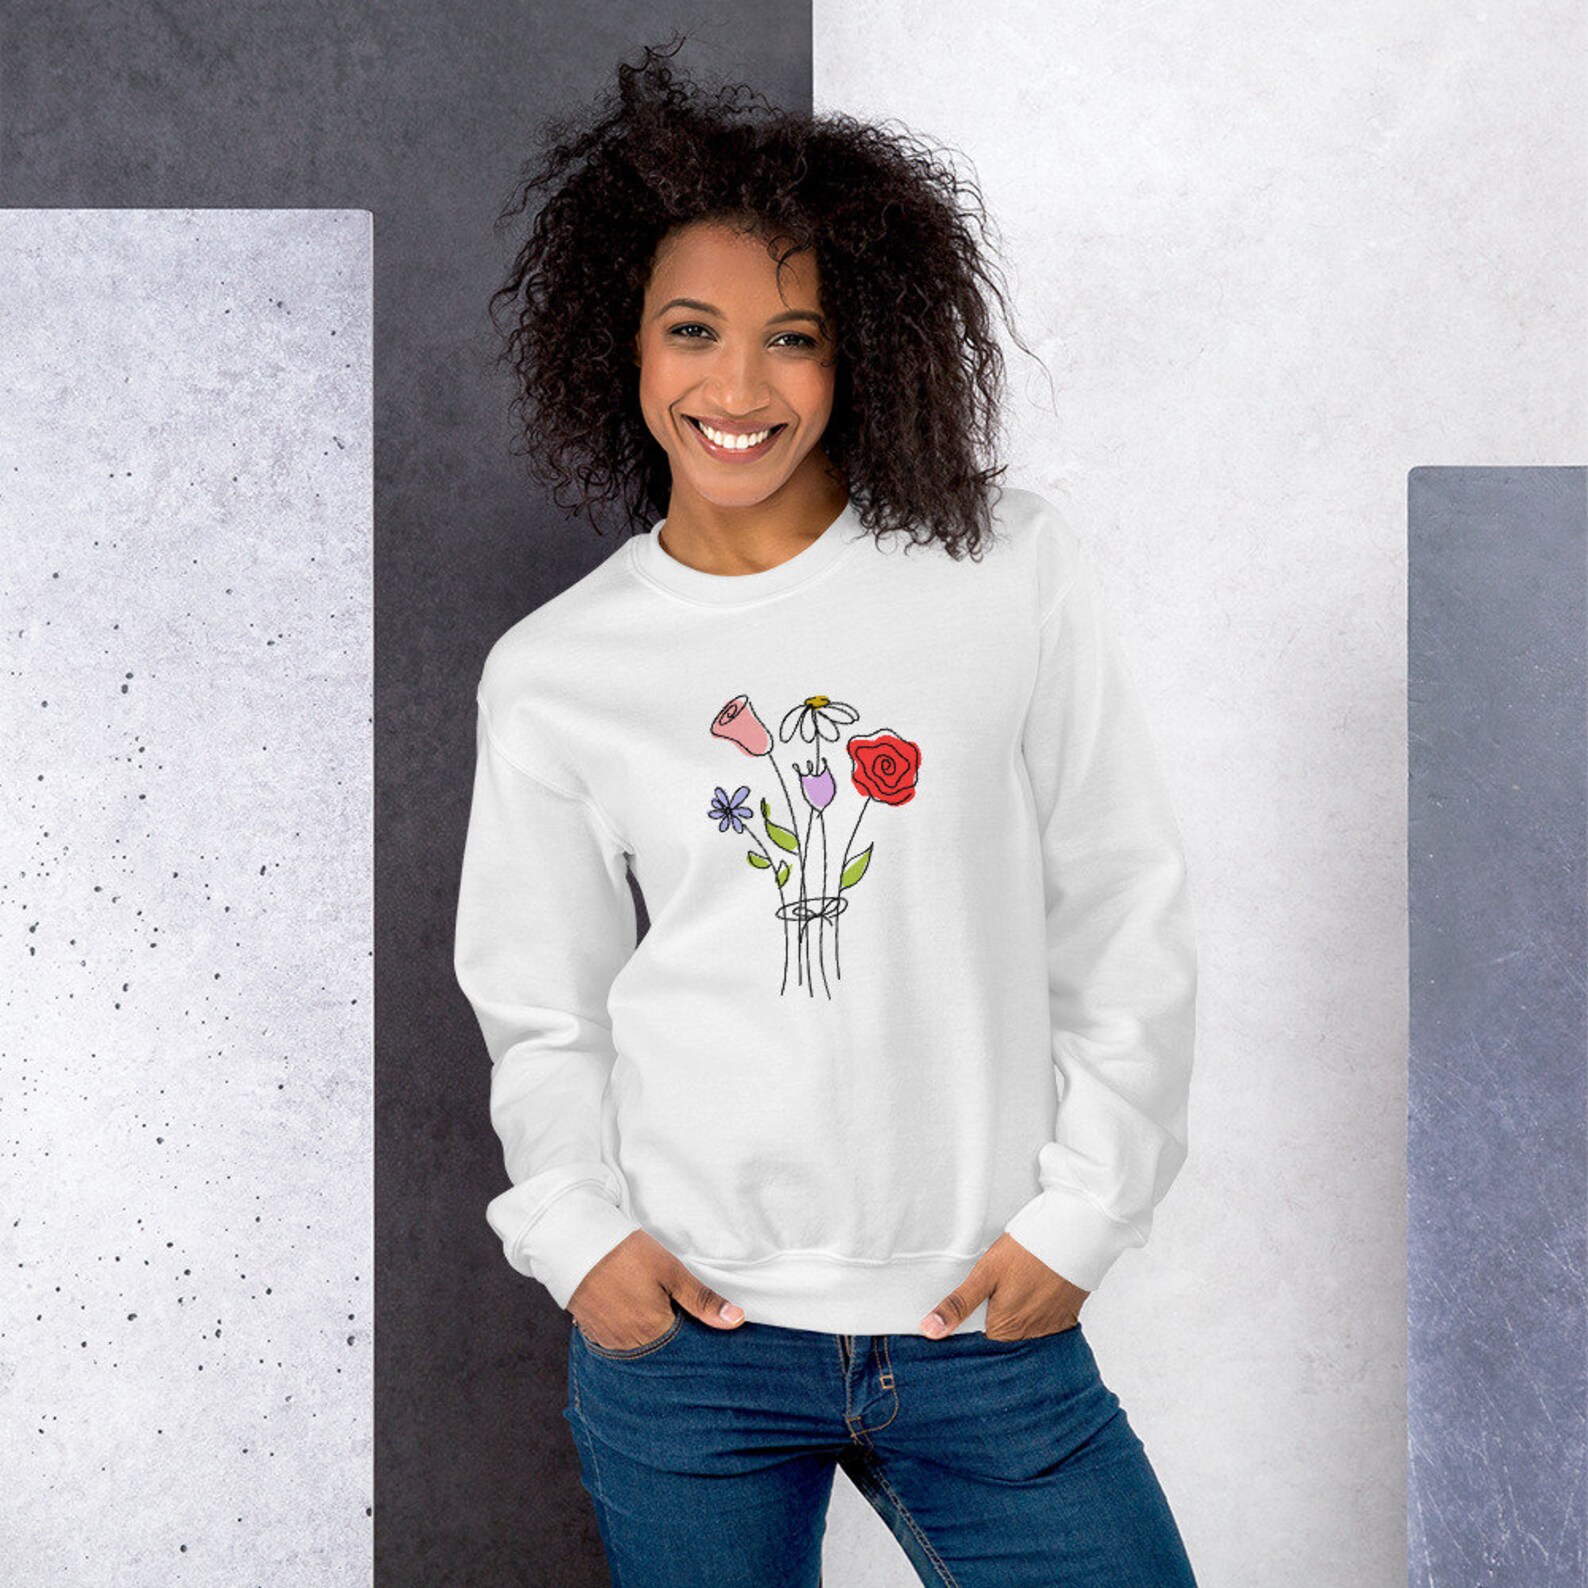 Floral sweatshirt flower sweatshirt floral graphic top | Etsy